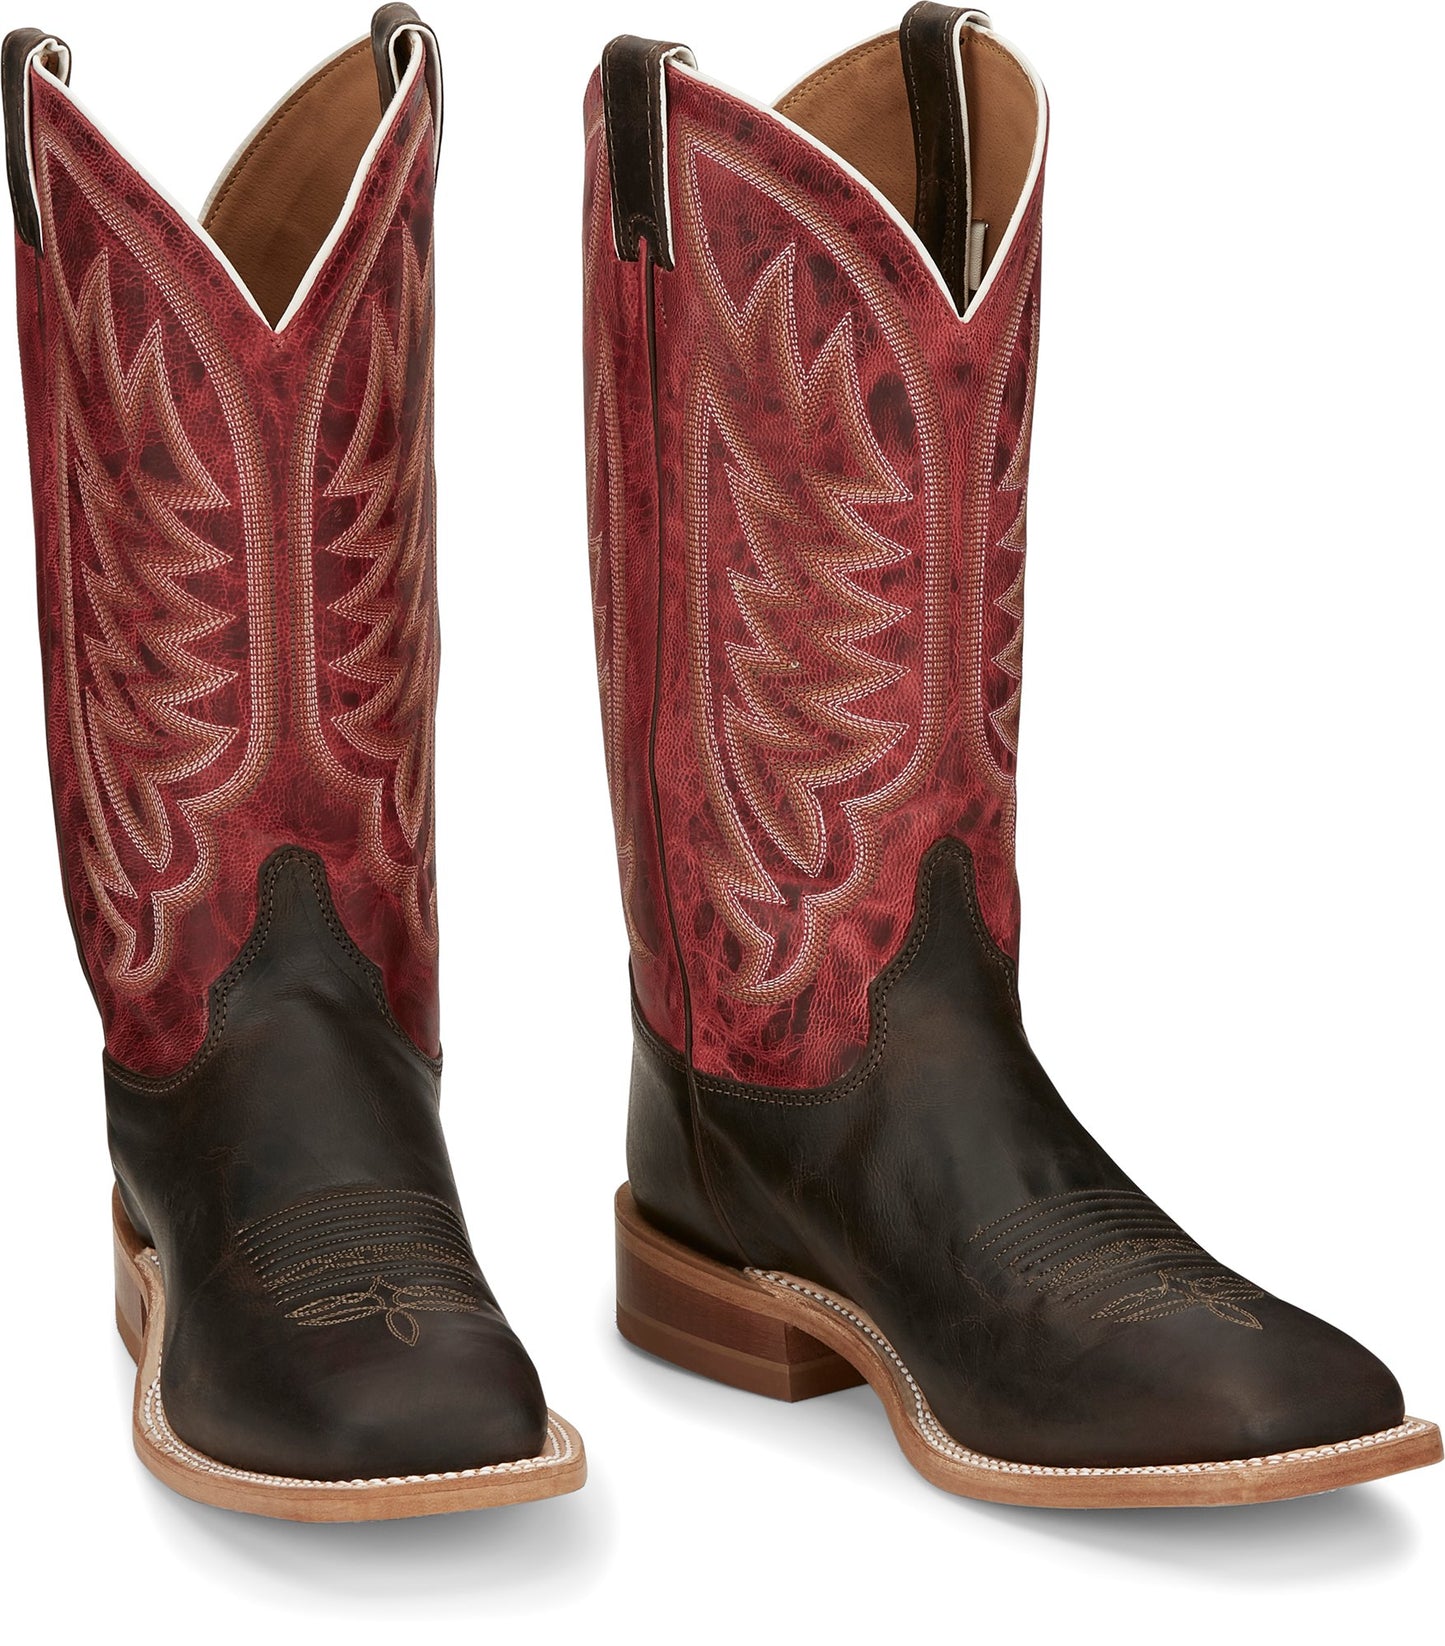 Justin® Men's Andrews Square Toe Cowboy Boots